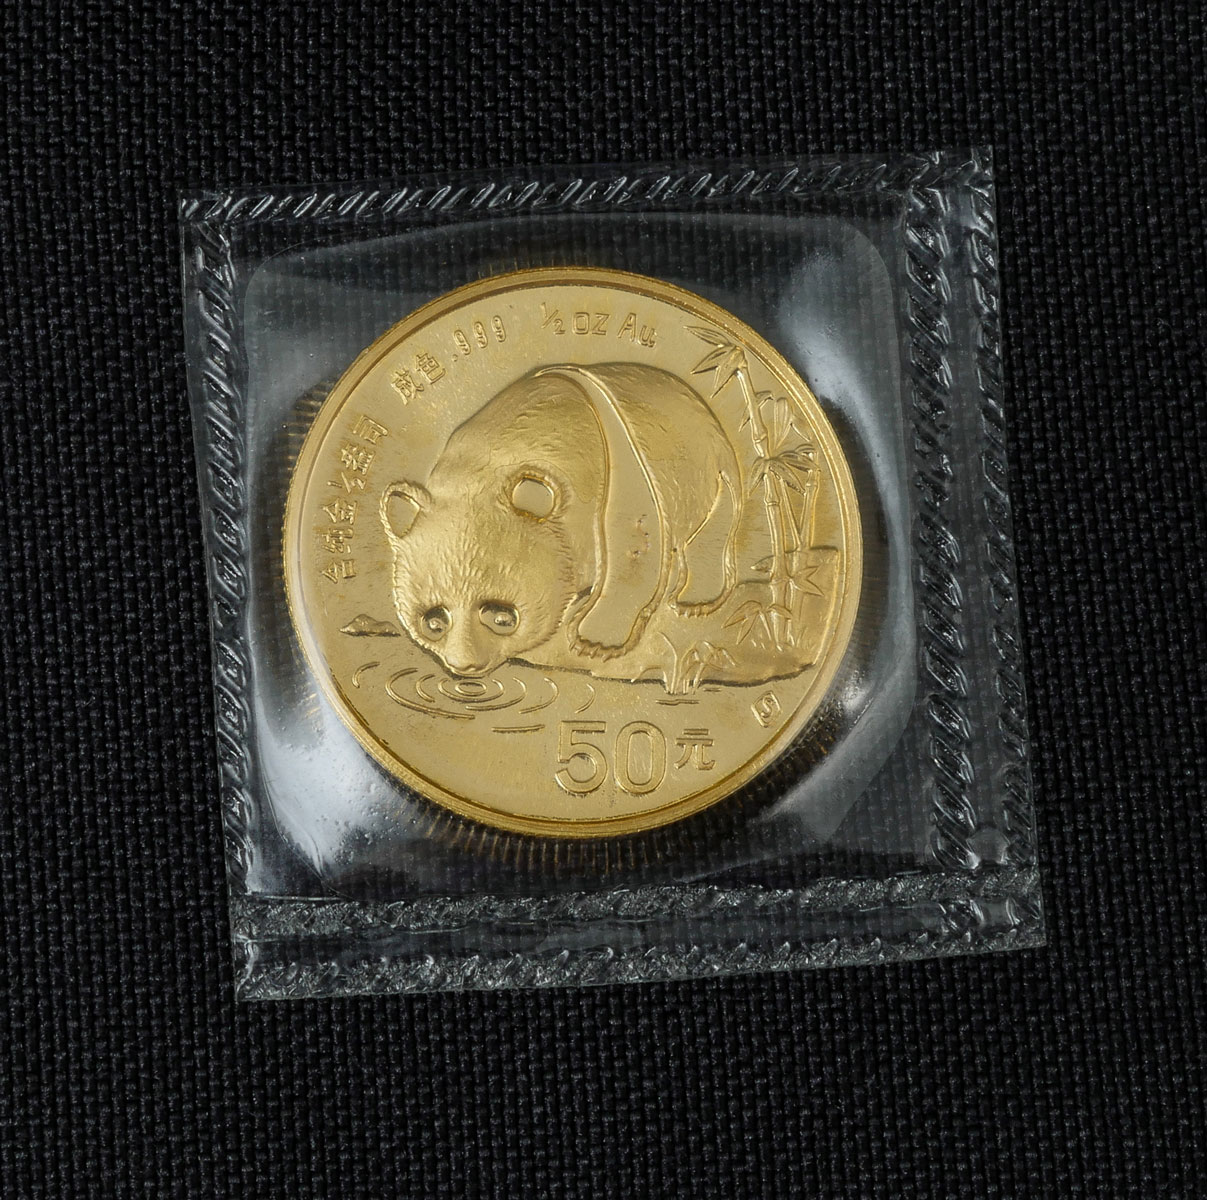 1987 CHINA 50 YUAN PANDA GOLD COIN: